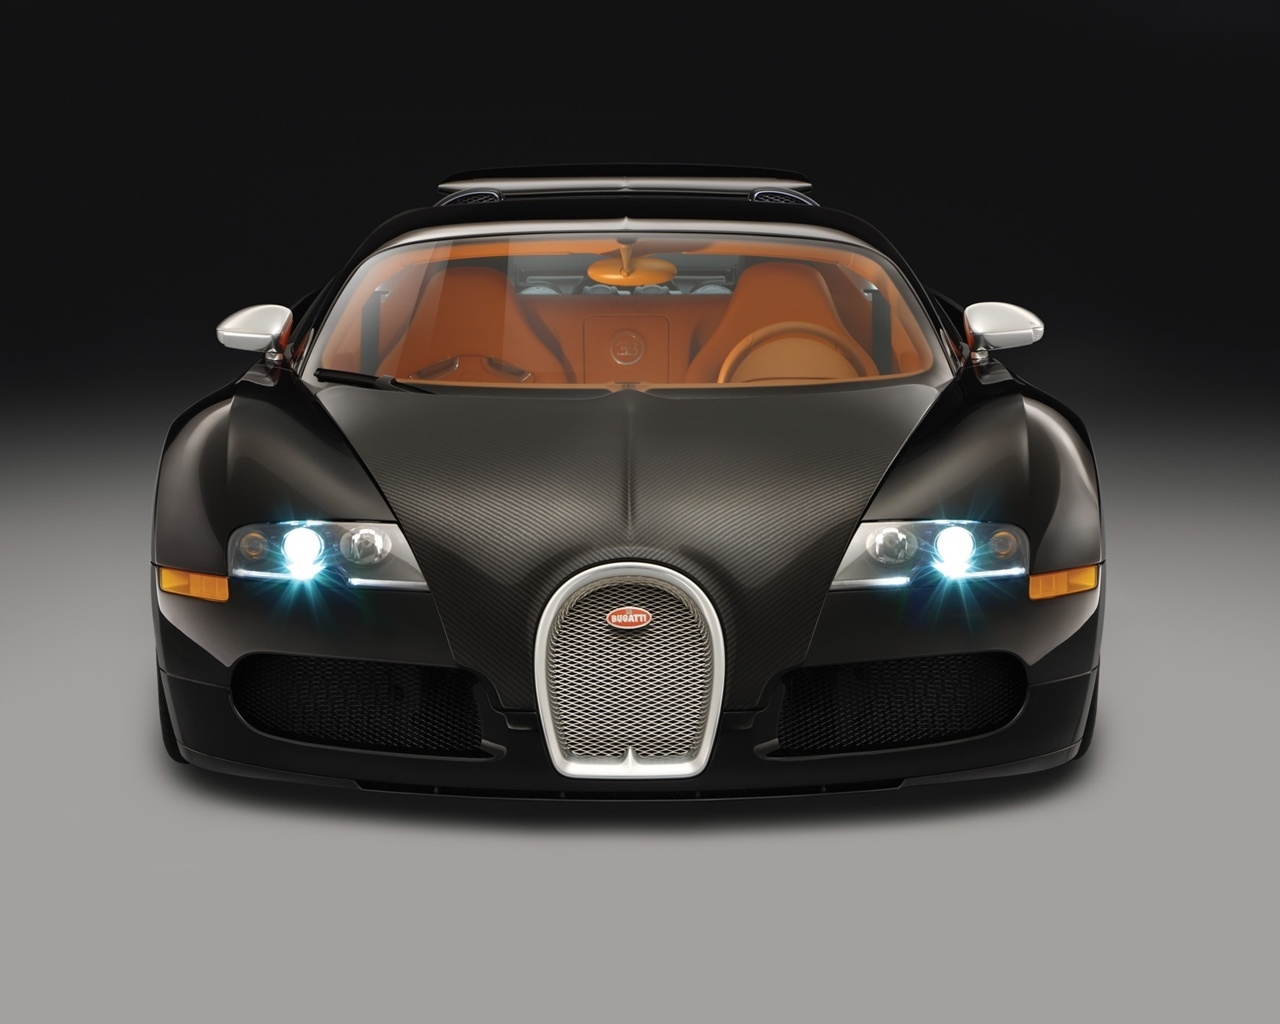 Bugatti Veyron Sang Noir 2008 - Front for 1280 x 1024 resolution